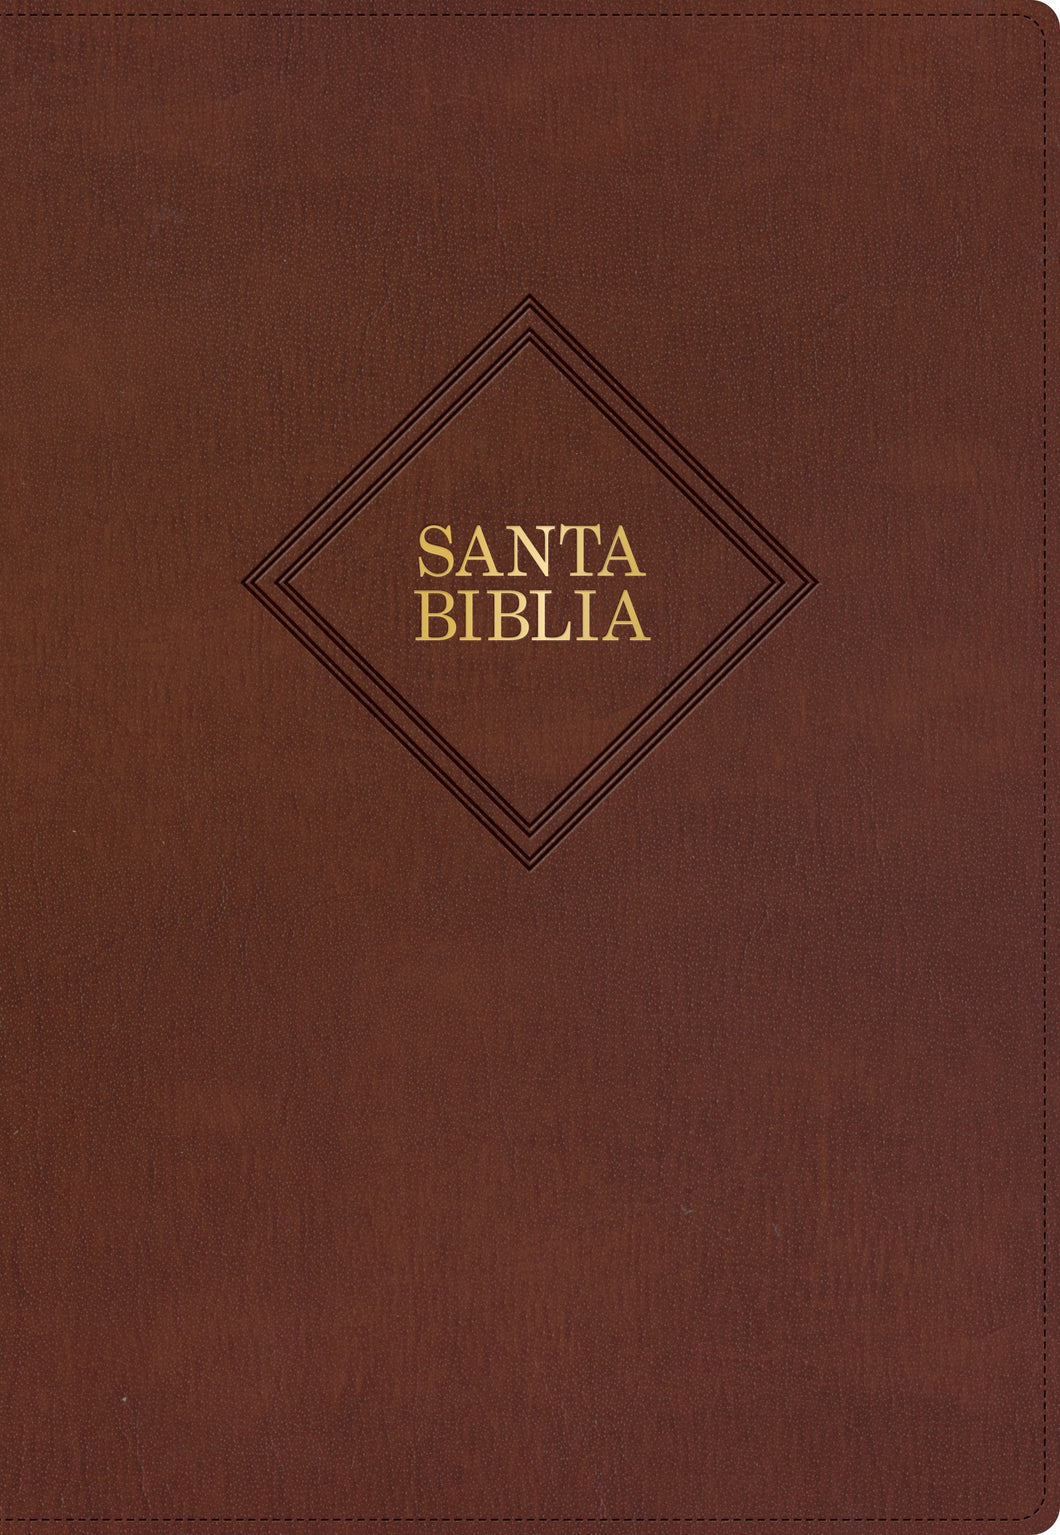 Spanish-RVR 1960 Super Giant Print Bible (Biblia Letra Super Gigante)-Brown Bonded Leather